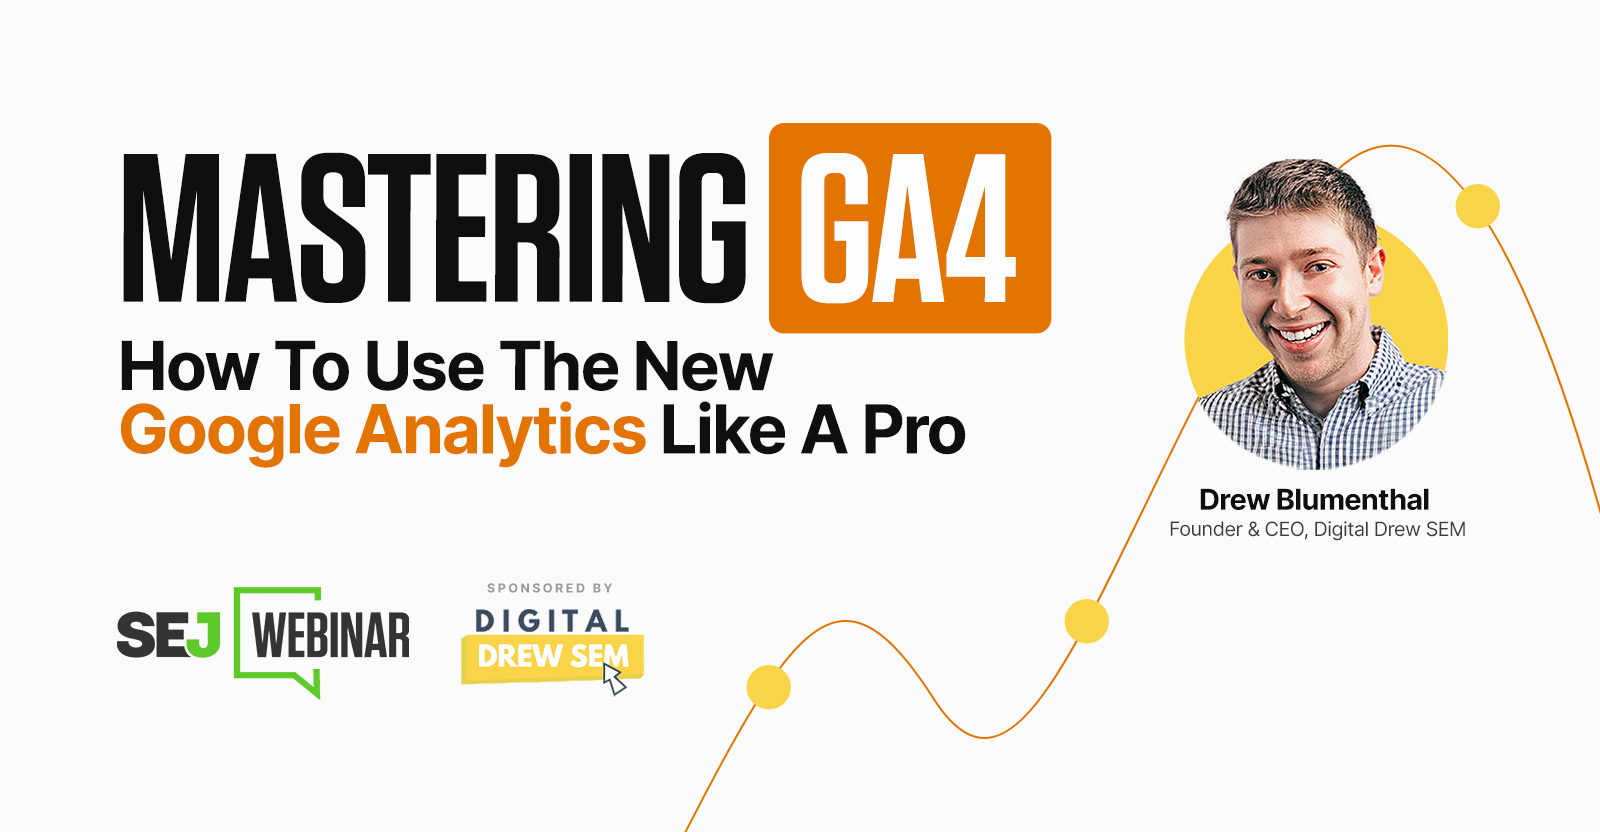 Mastering GA4: How To Use The New Google Analytics Like A Pro